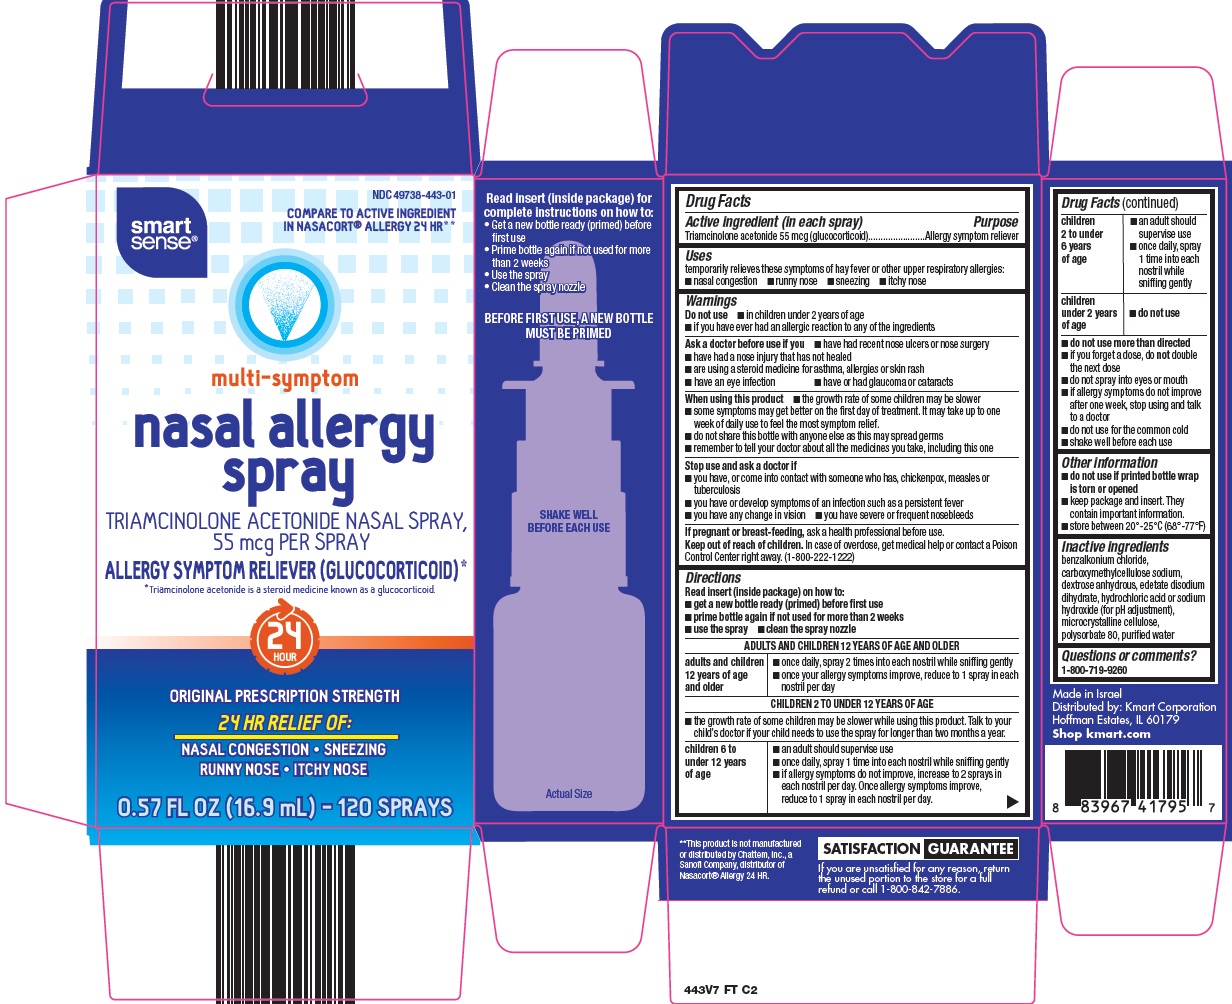 nasal allergy spray image